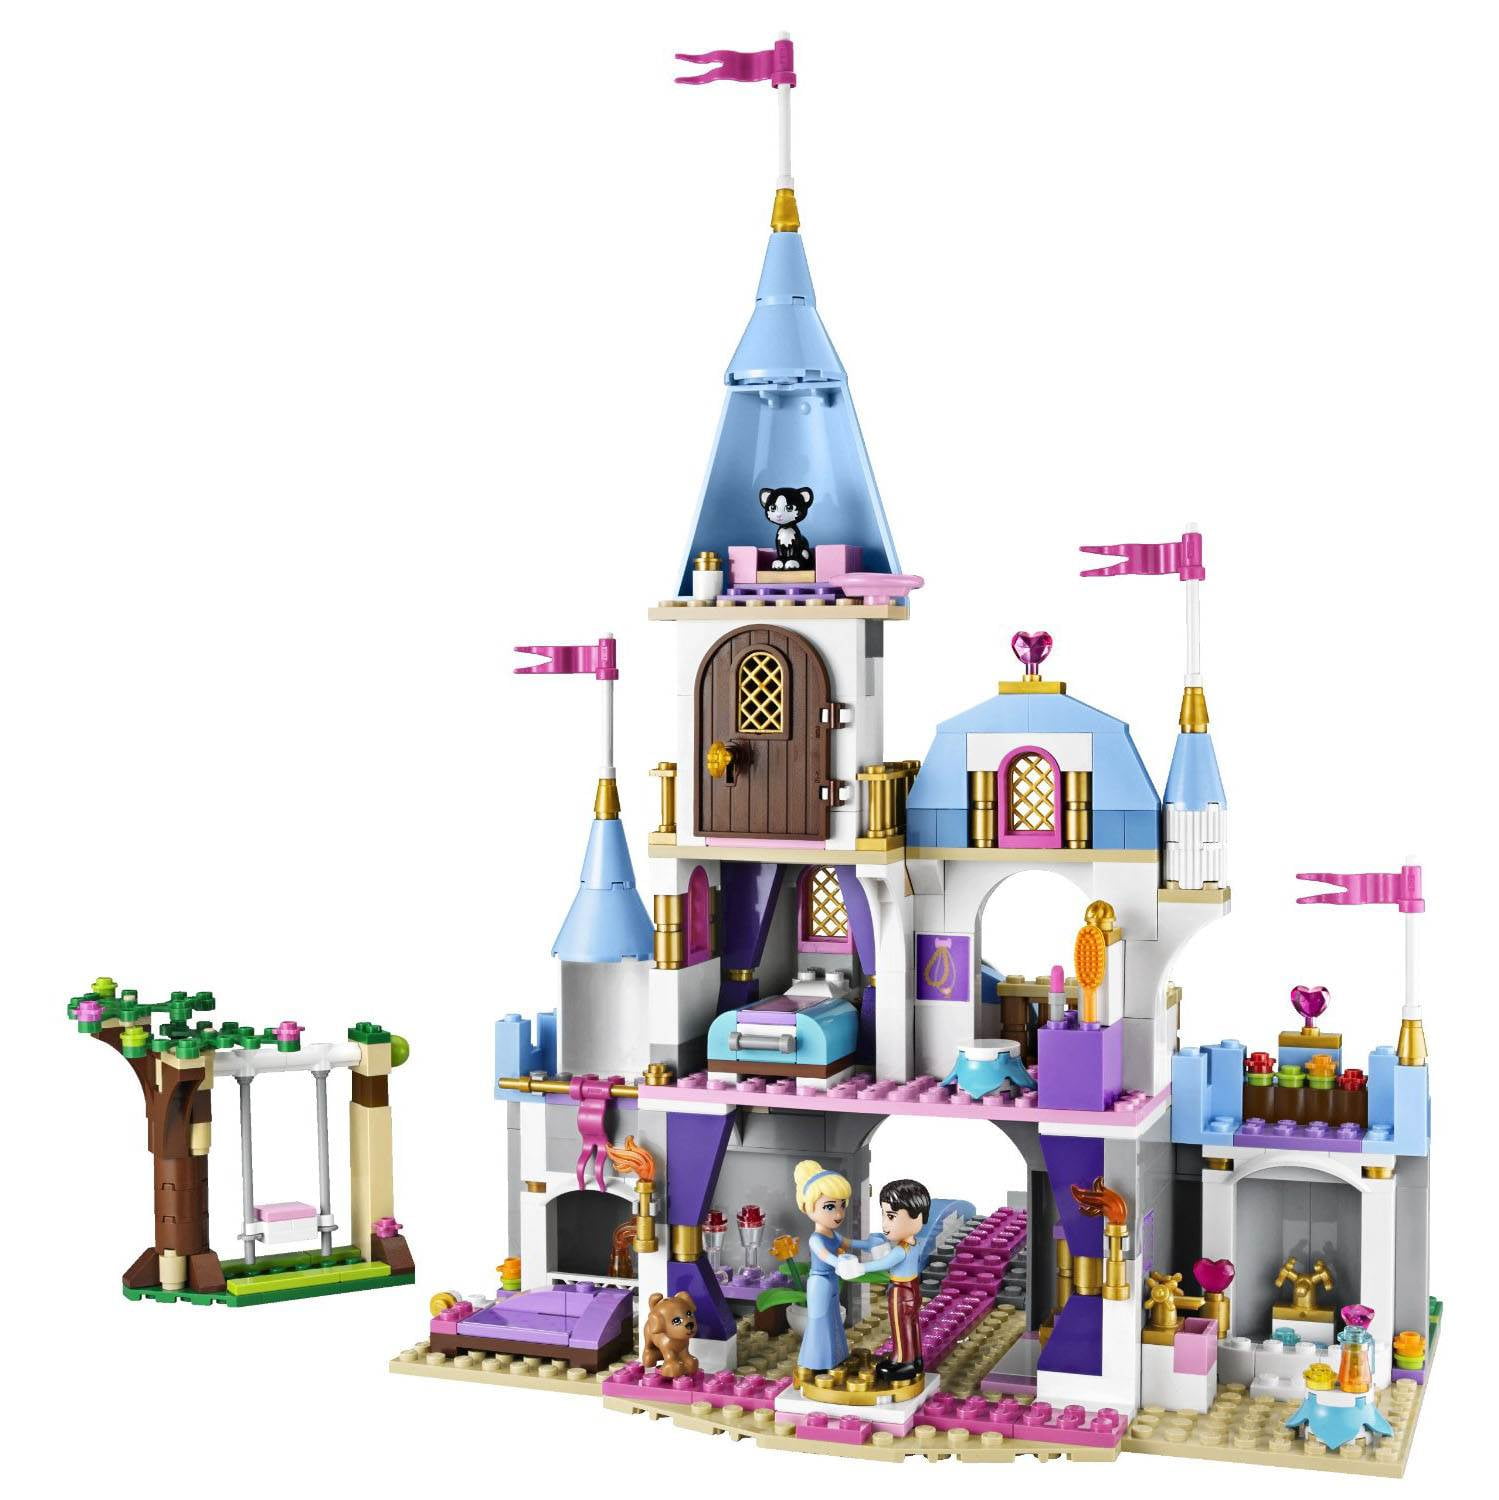 affældige gear Biskop LEGO Disney Princess Cinderella's Romantic Castle Play Set #41055 -  Walmart.com